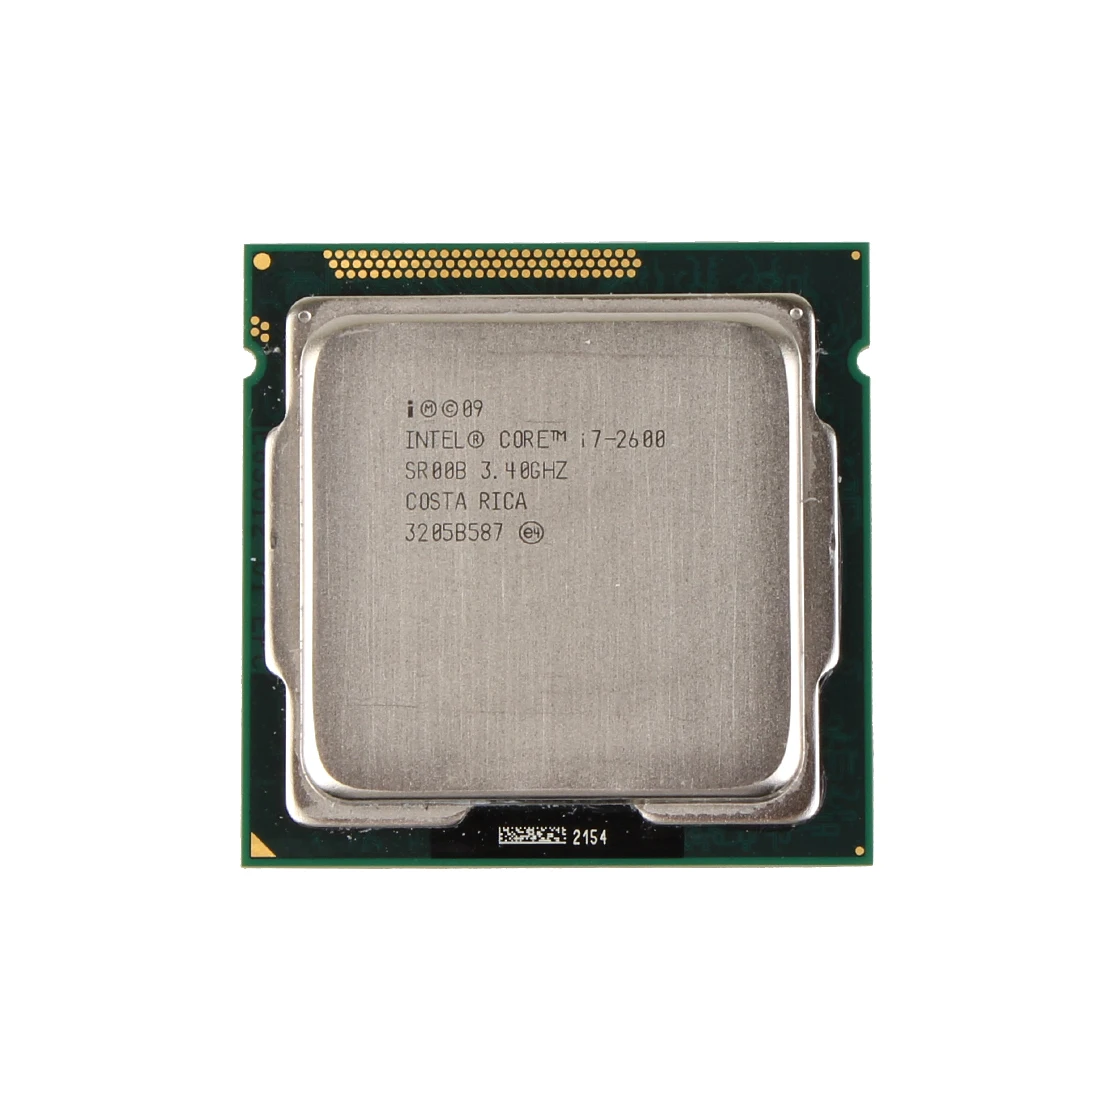 Intel i3 3.3 ghz. Intel Core i7 2600k. Intel Core i7-2600 Sandy Bridge lga1155, 4 x 3400 МГЦ. Intel 430 Celeron sl9xn. Intel Core i7-2700k Sandy Bridge lga1155, 4 x 3500 МГЦ.